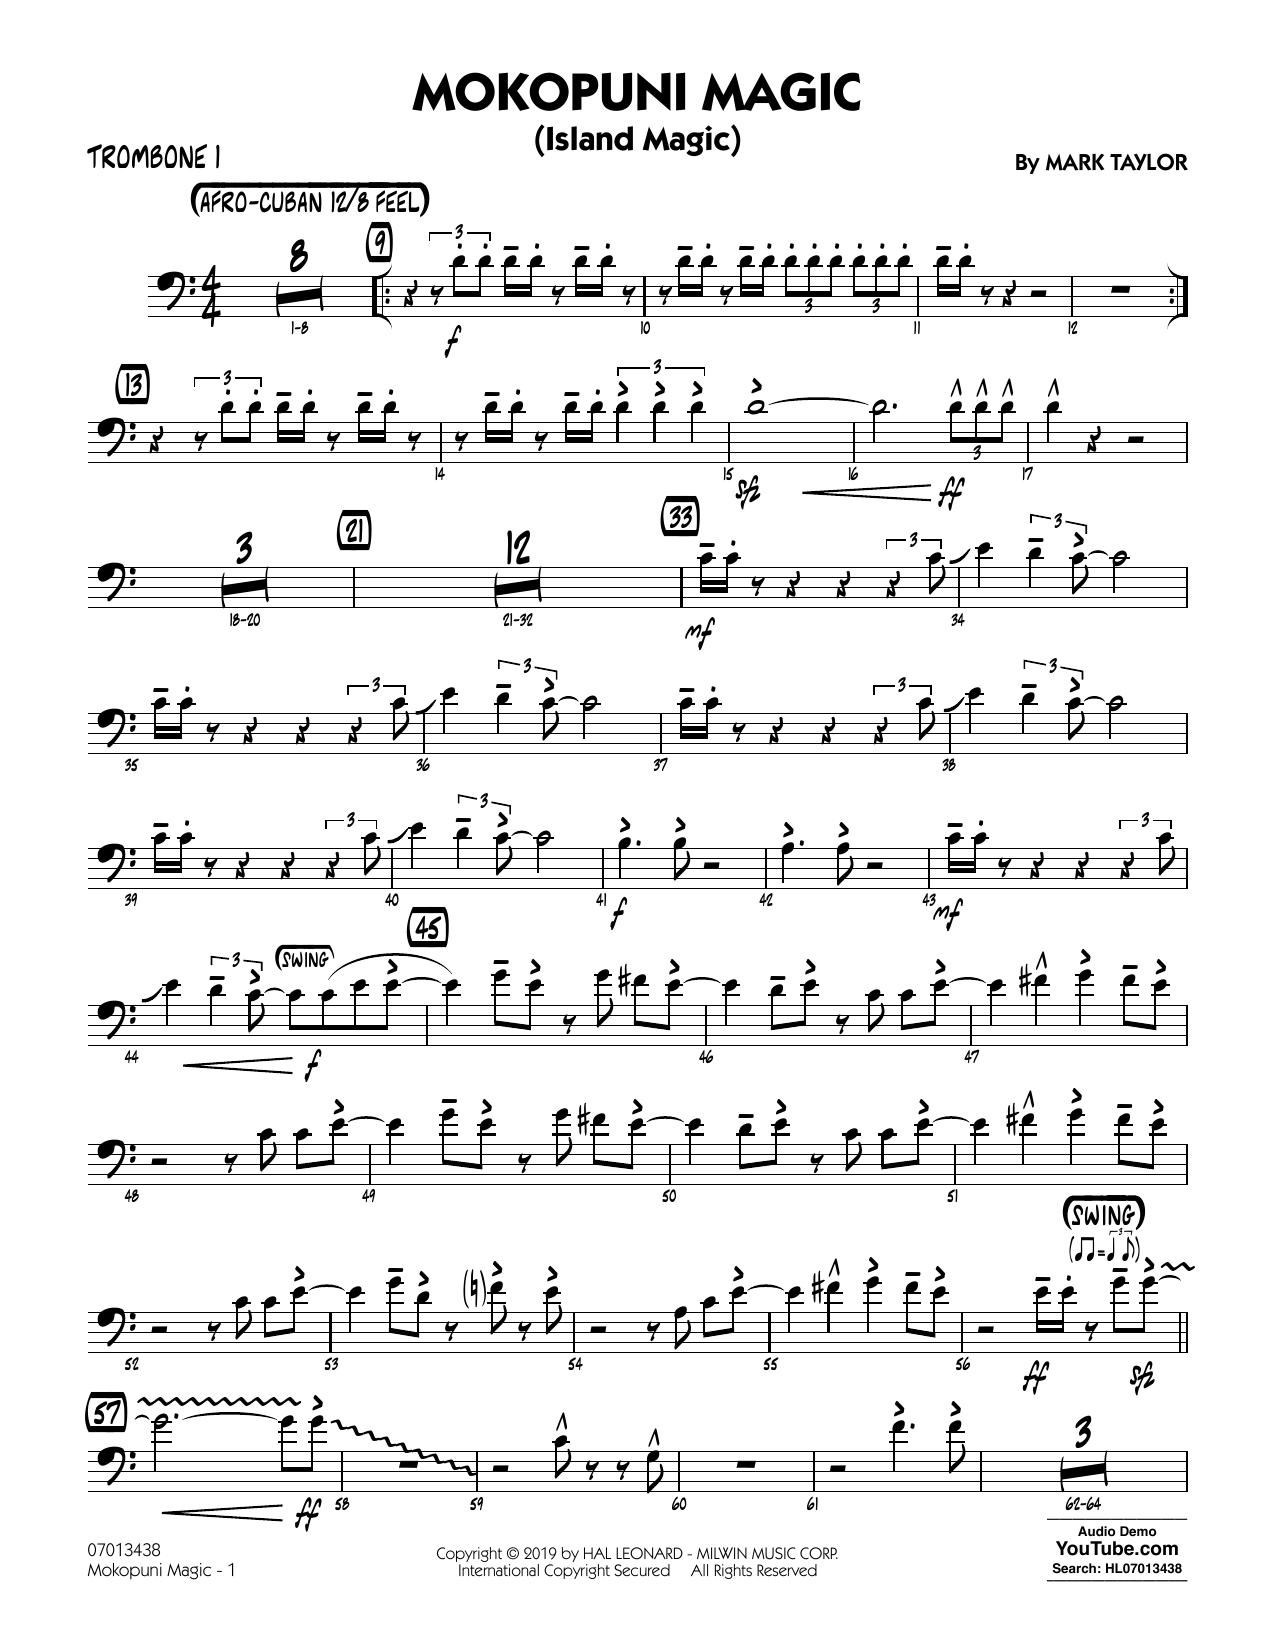 Mark Taylor Mokopuni Magic (Island Magic) - Trombone 1 Sheet Music Notes & Chords for Jazz Ensemble - Download or Print PDF